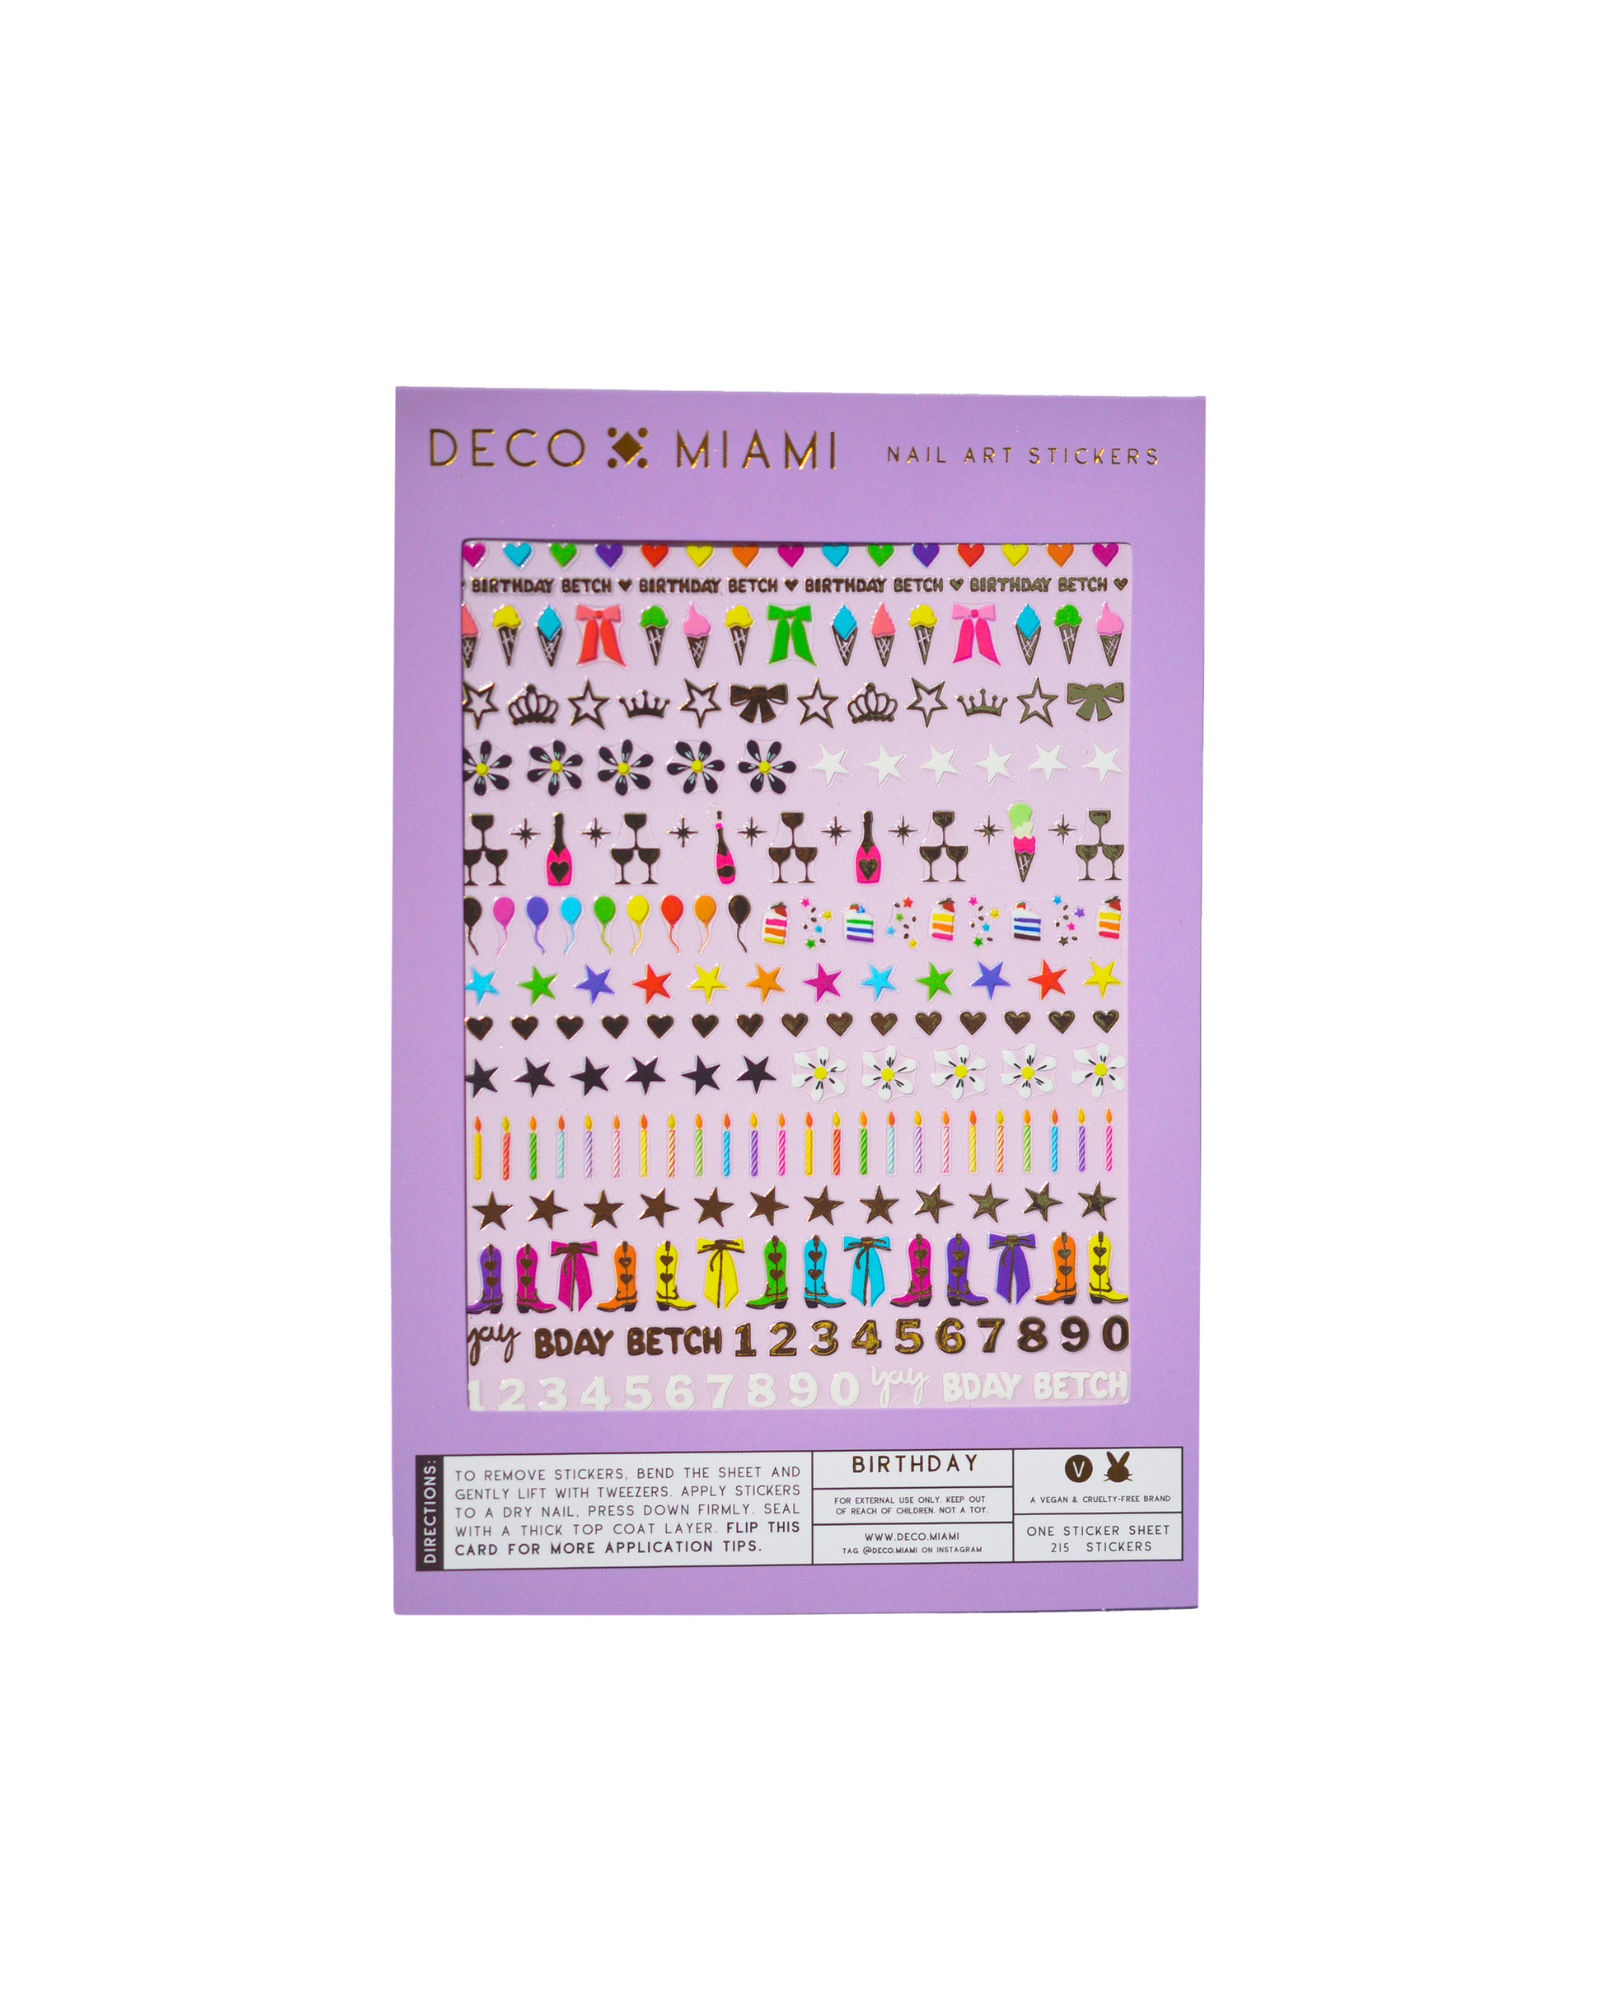 Birthday nail art stickers in purple packaging